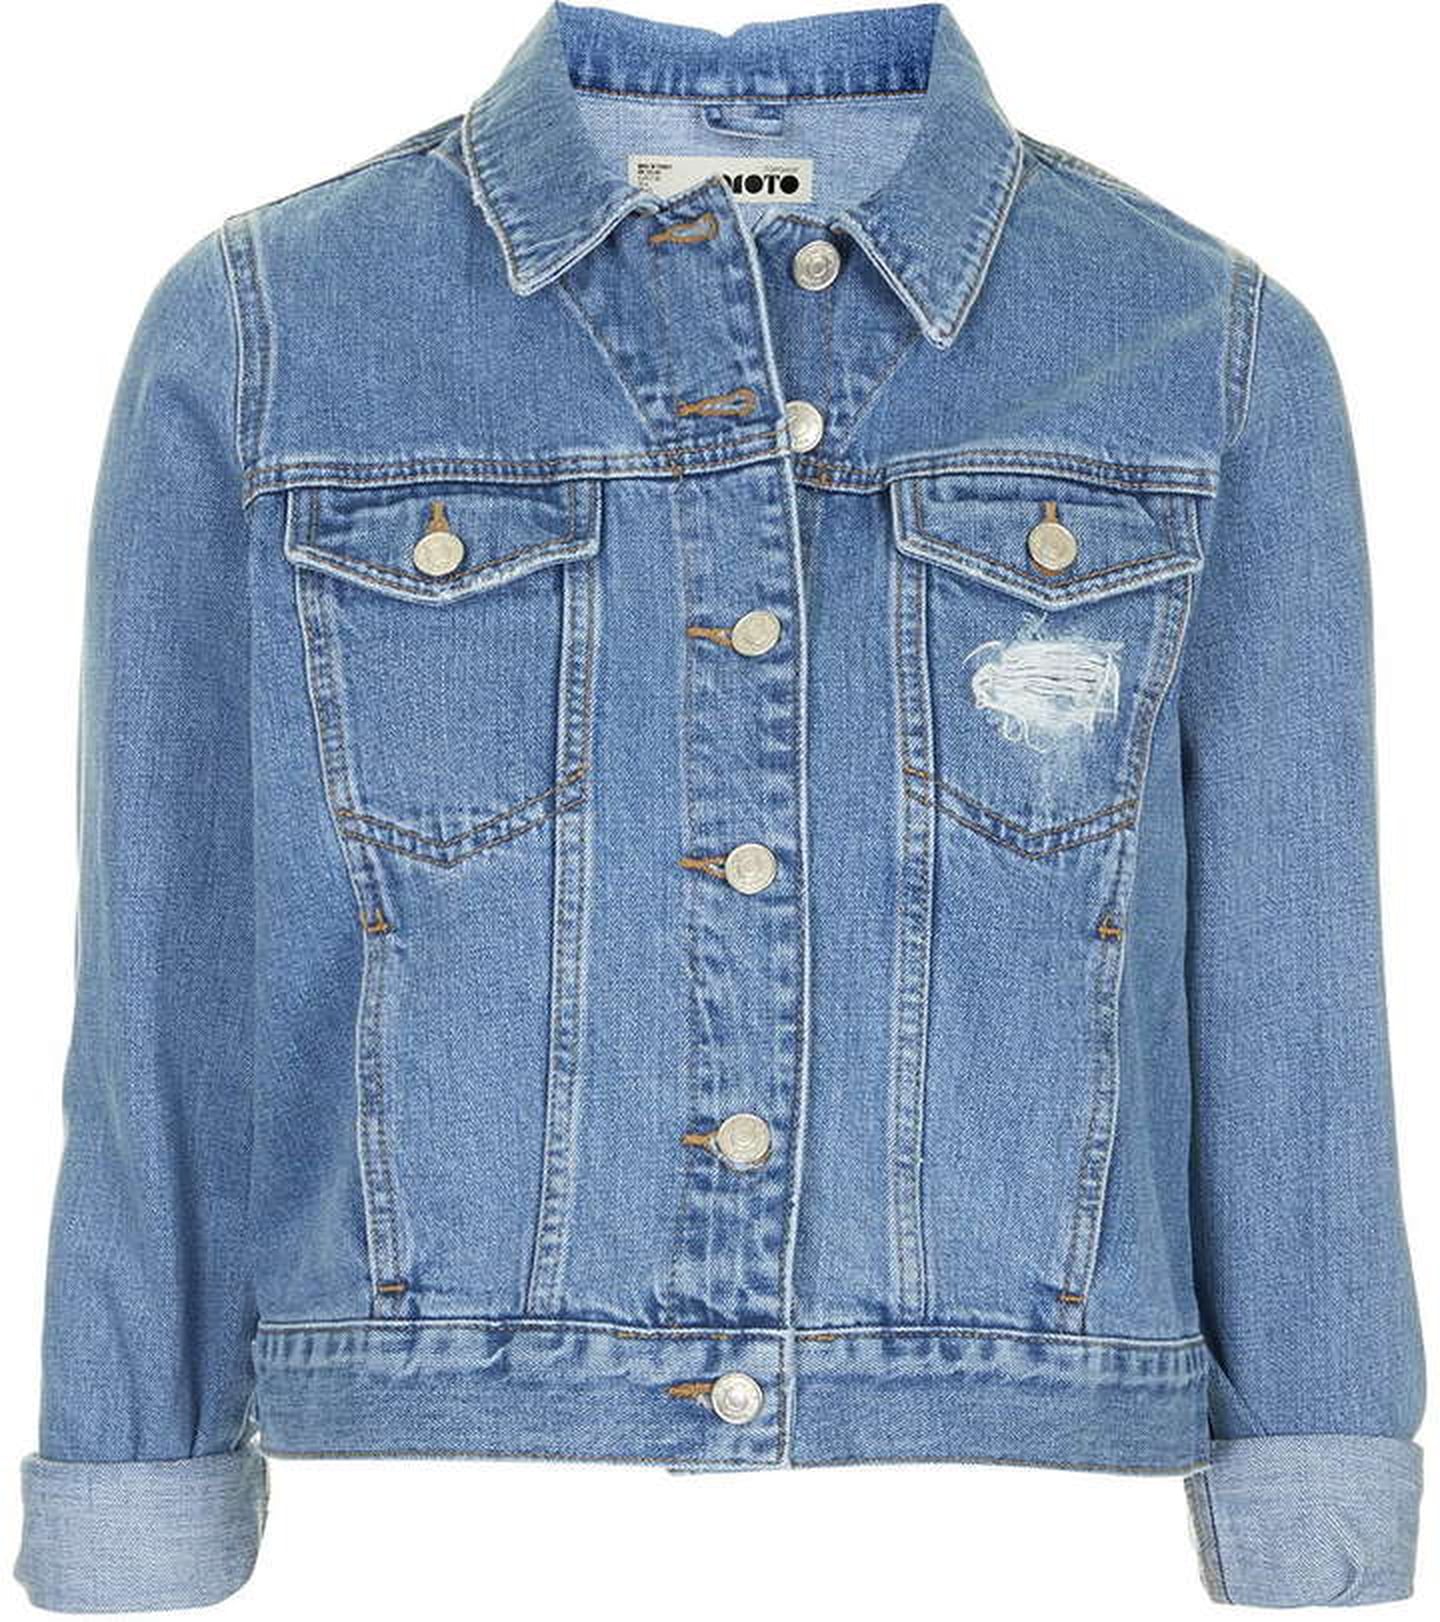 Jackets Every Woman Needs | POPSUGAR Fashion